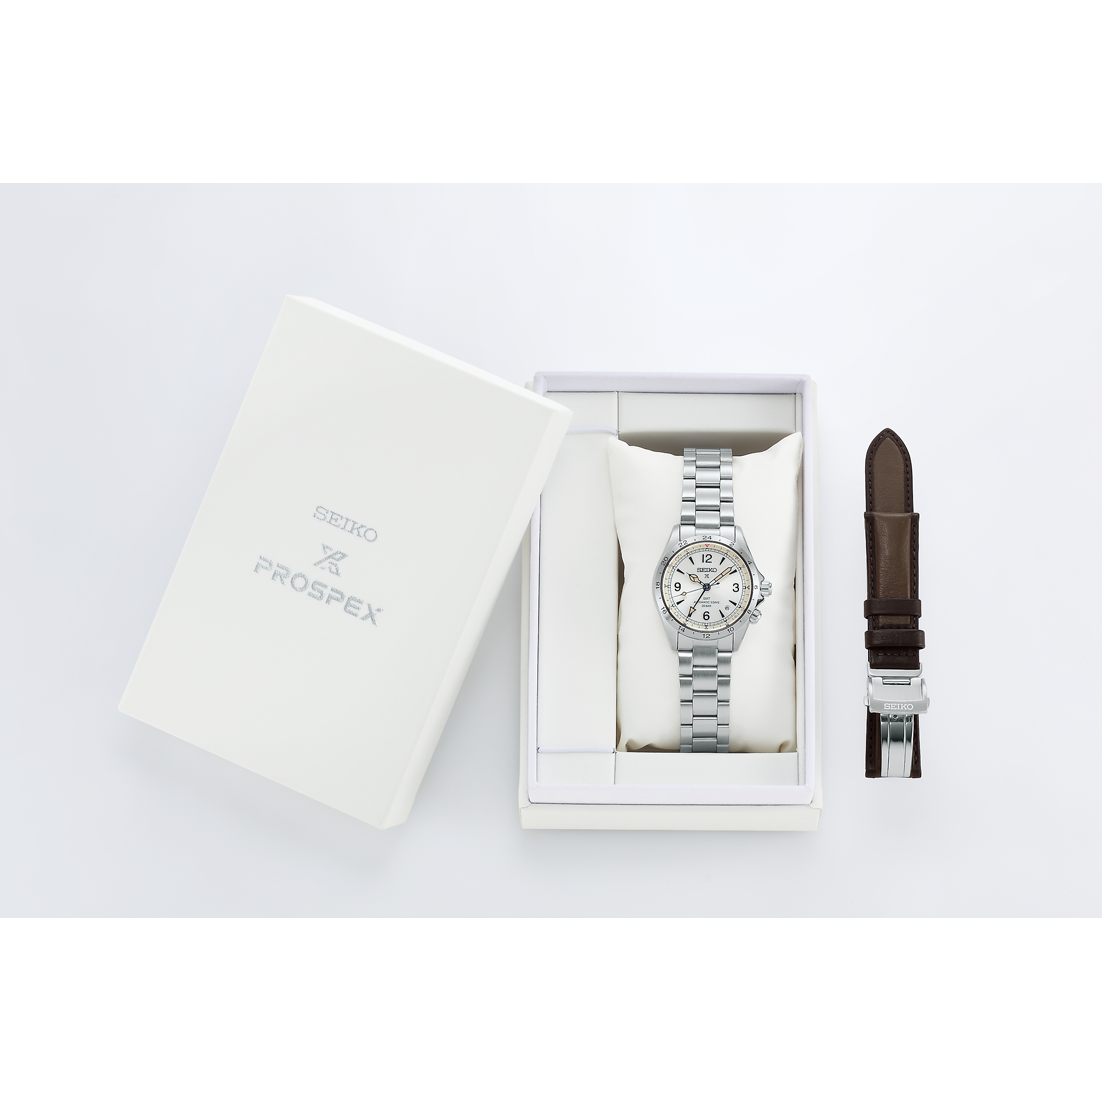 Seiko Prospex Alpinist Mechanical GMT Limited Edition 110th Seiko Wristwatch making Anniversary SPB409J1